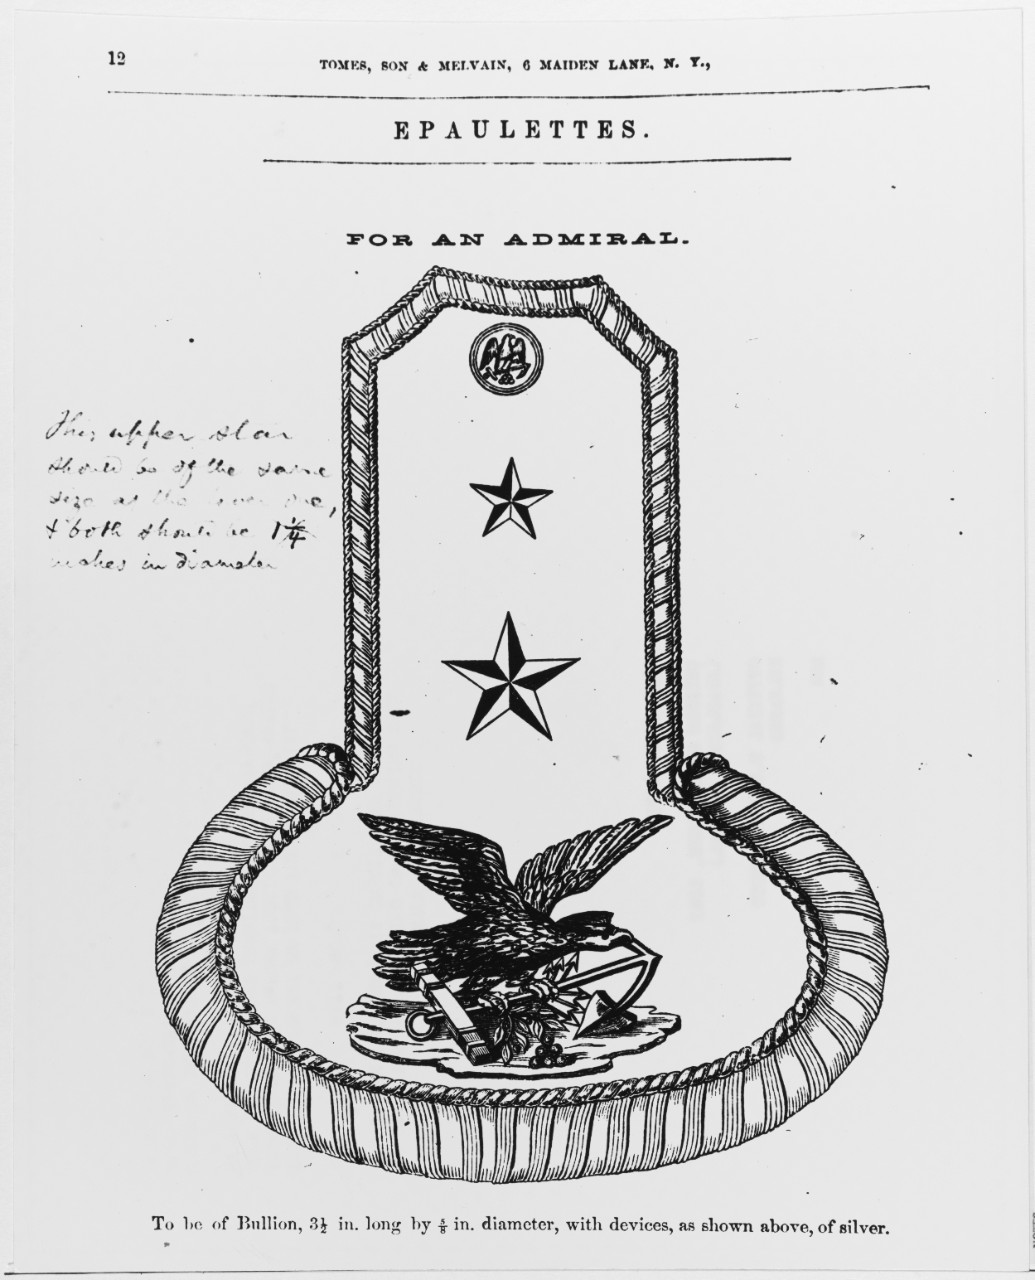 Uniform Regulations, 1862. Epaulets for an Admiral